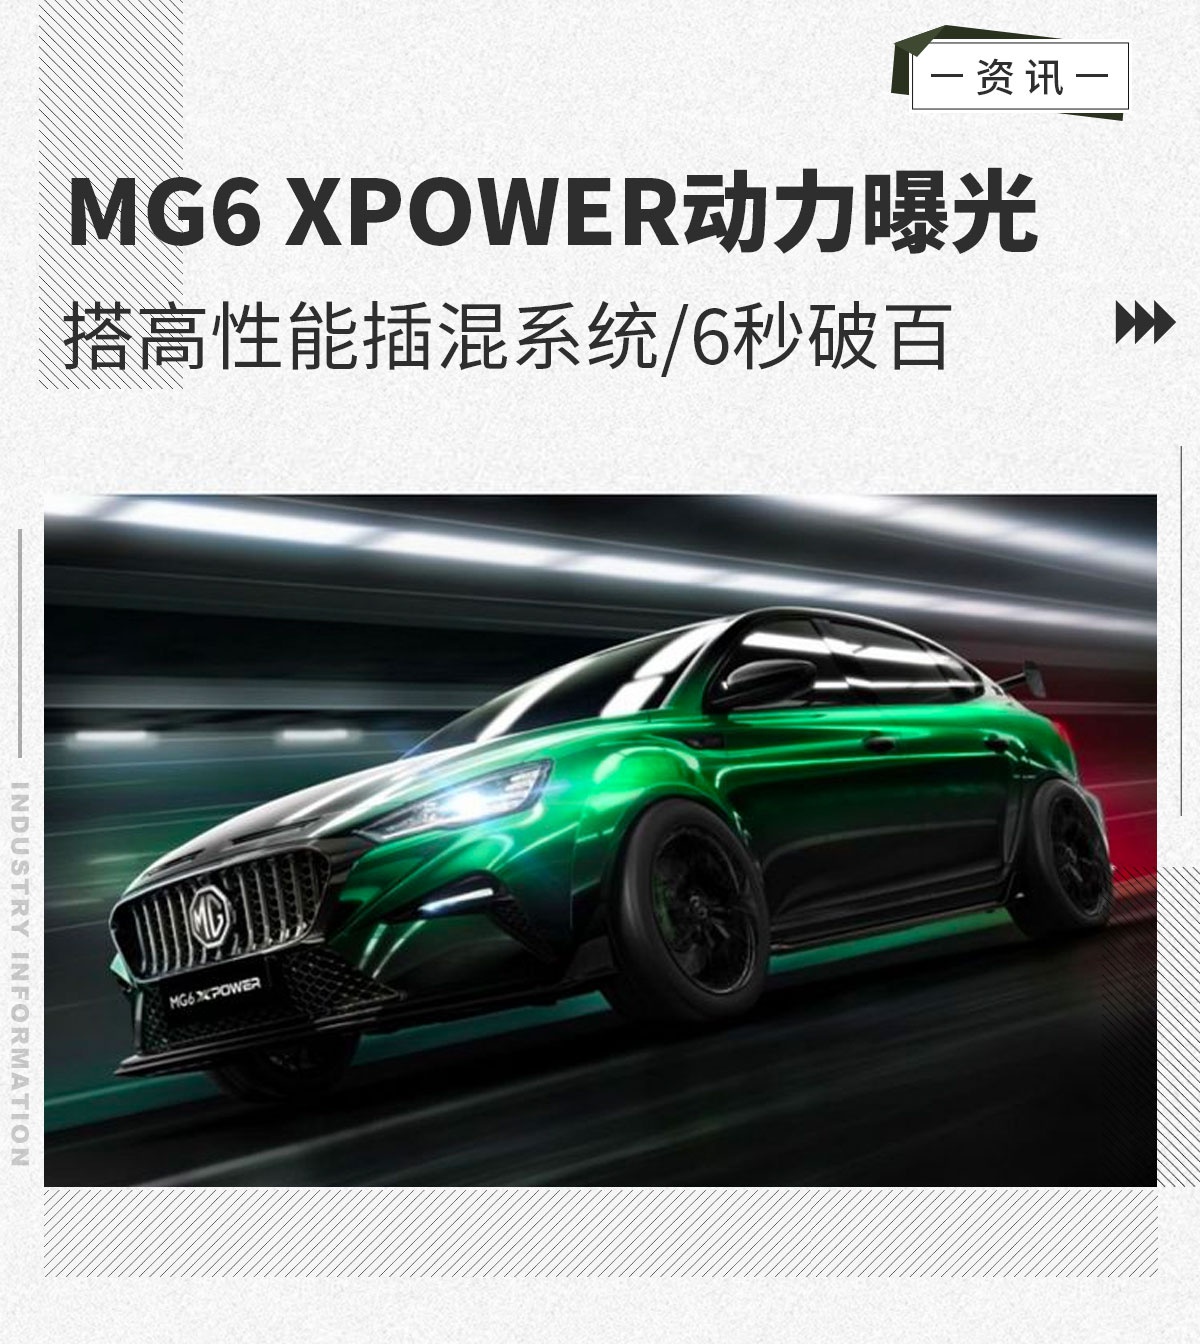 MG6 XPOWER动力曝光 搭高性能插混系统/6秒破百